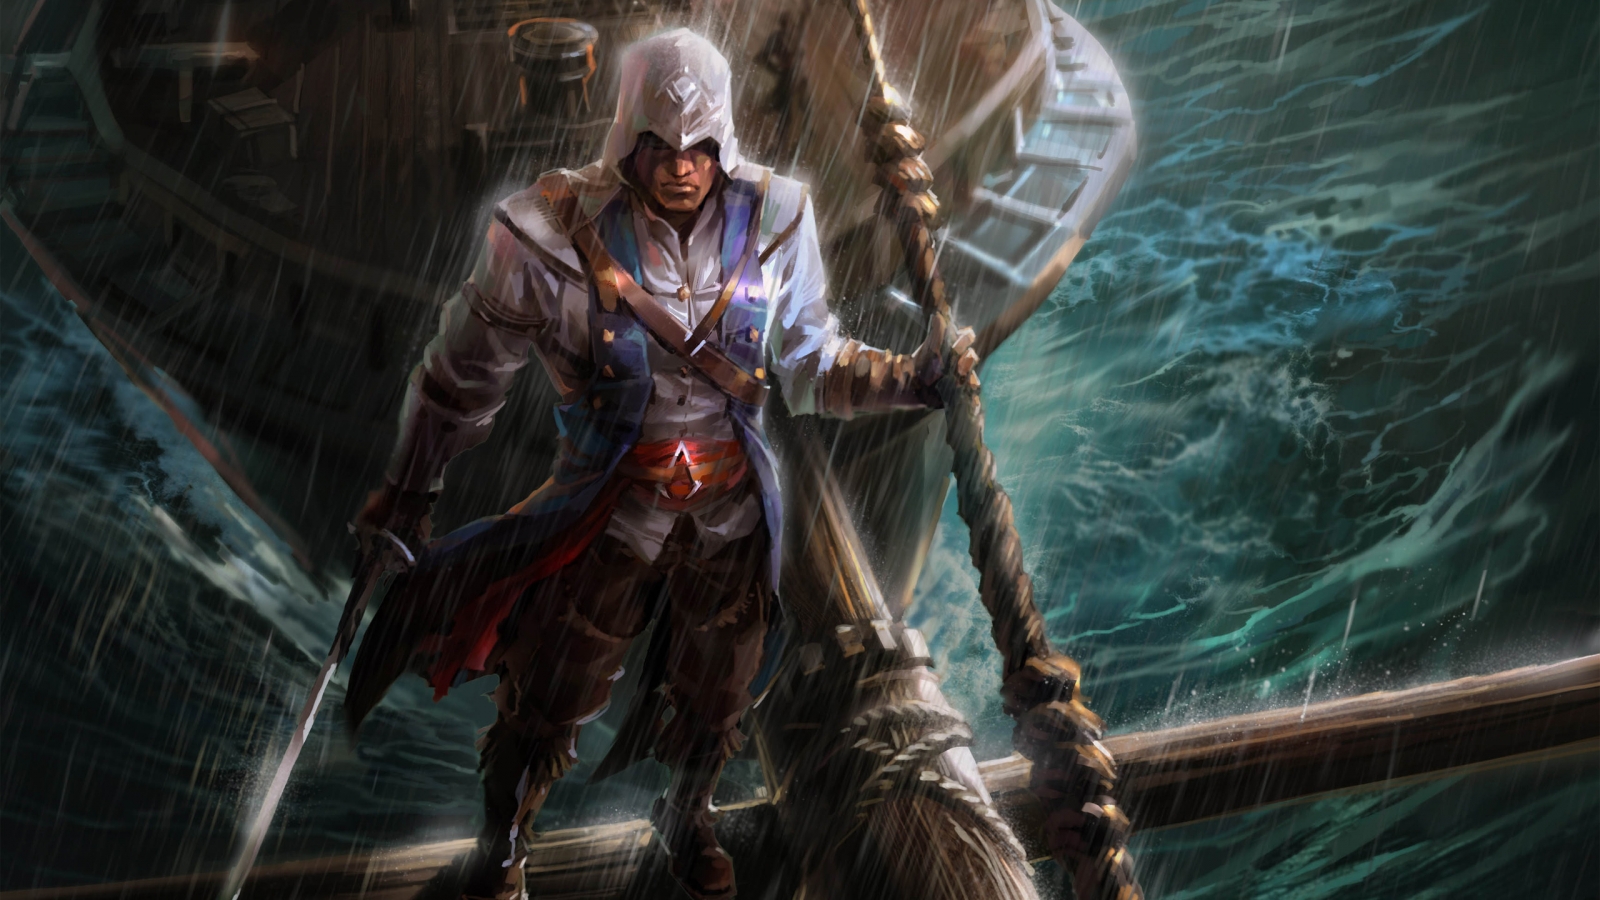 Assassins Creed Fan Art for 1600 x 900 HDTV resolution